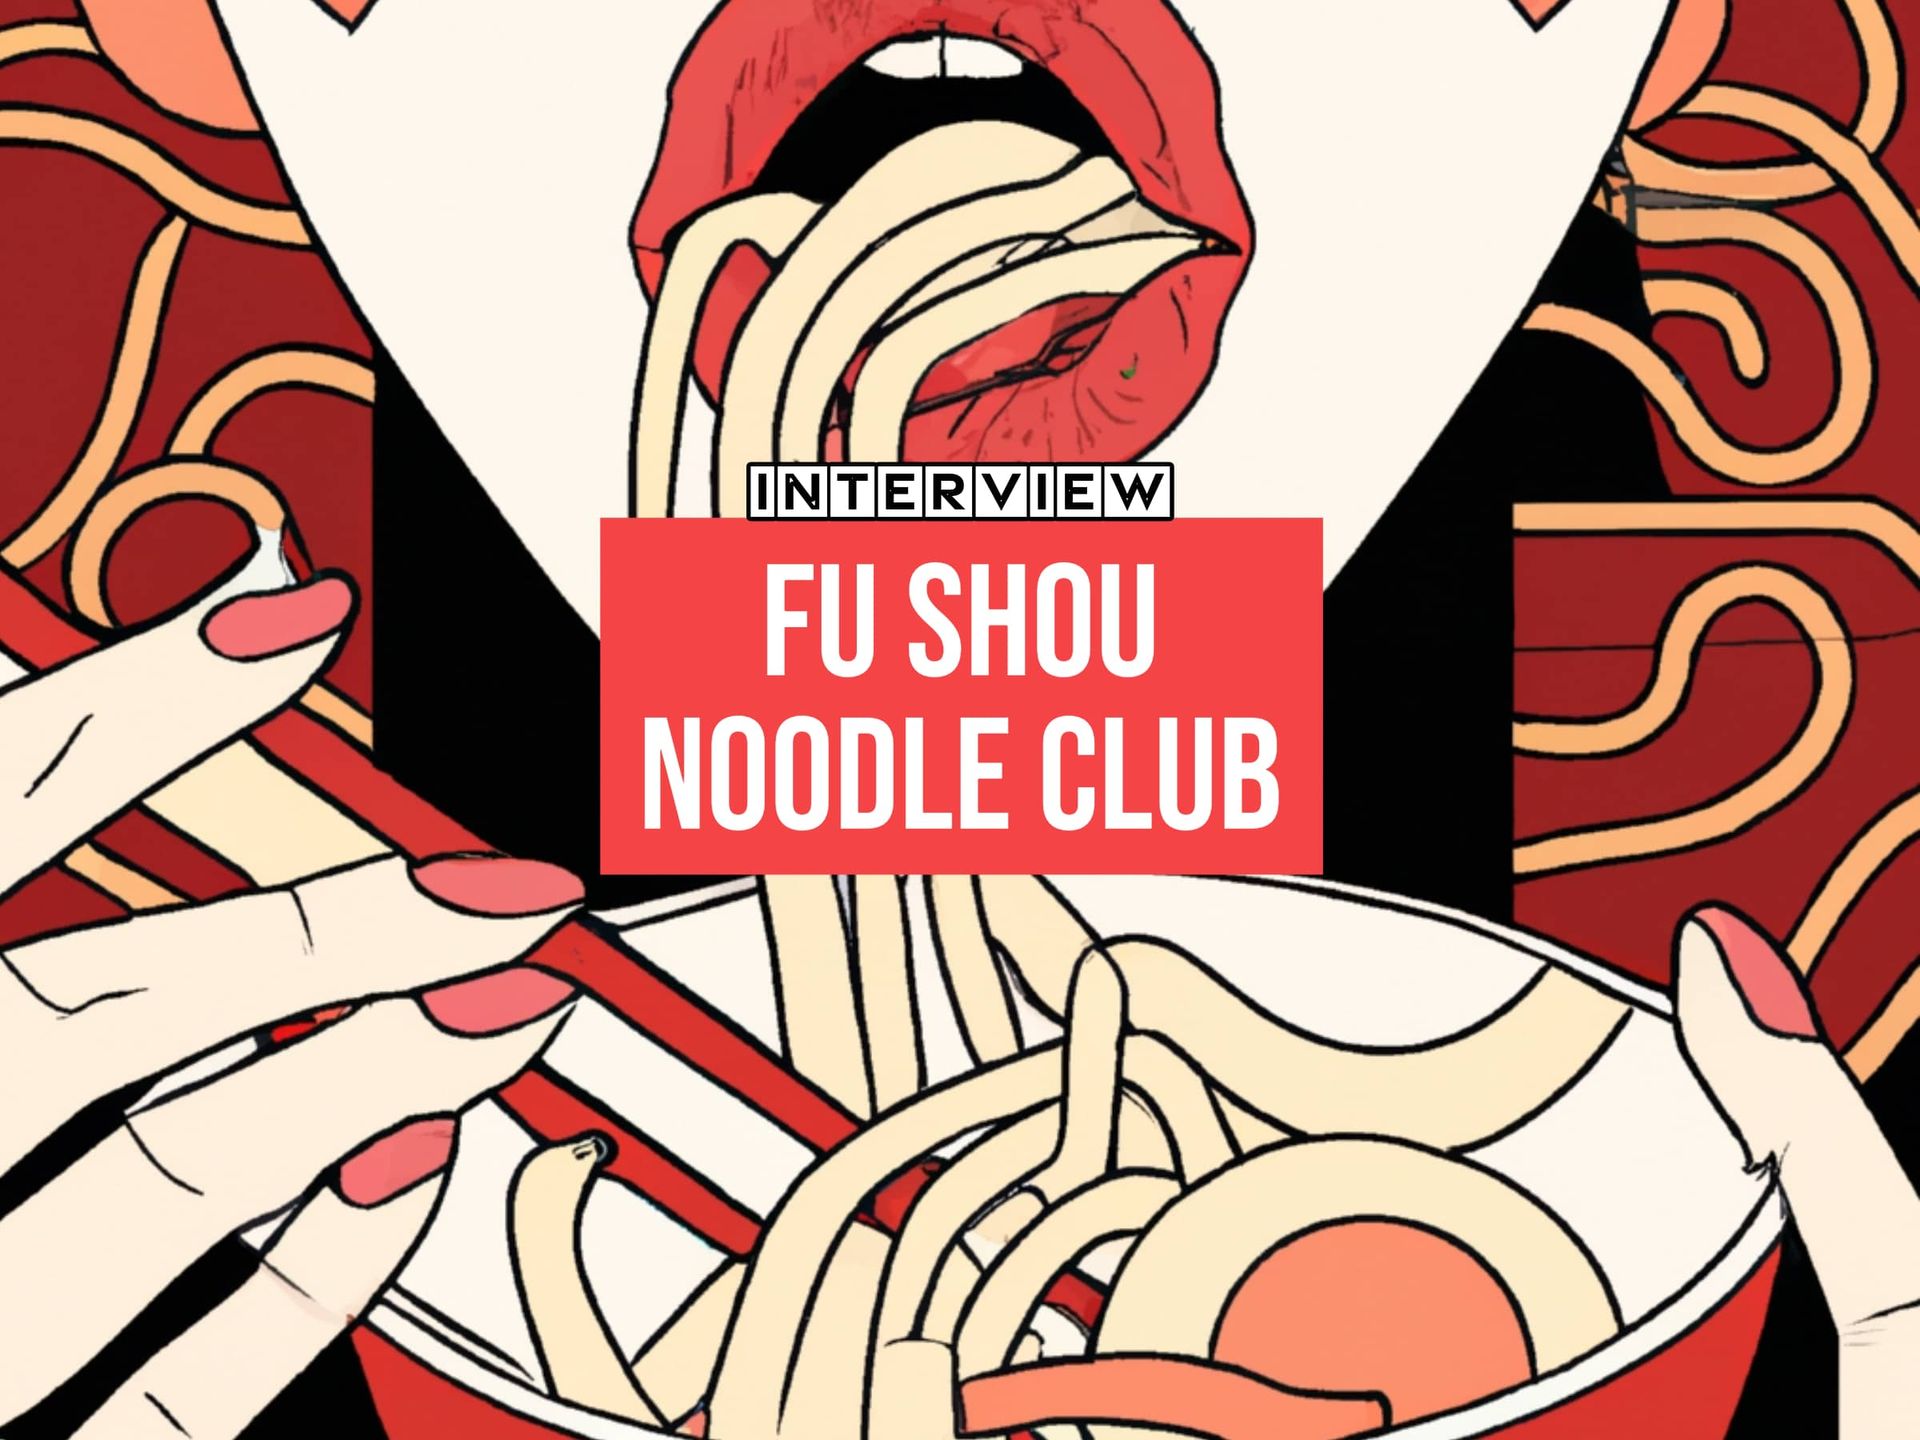 Fu shou noodle club